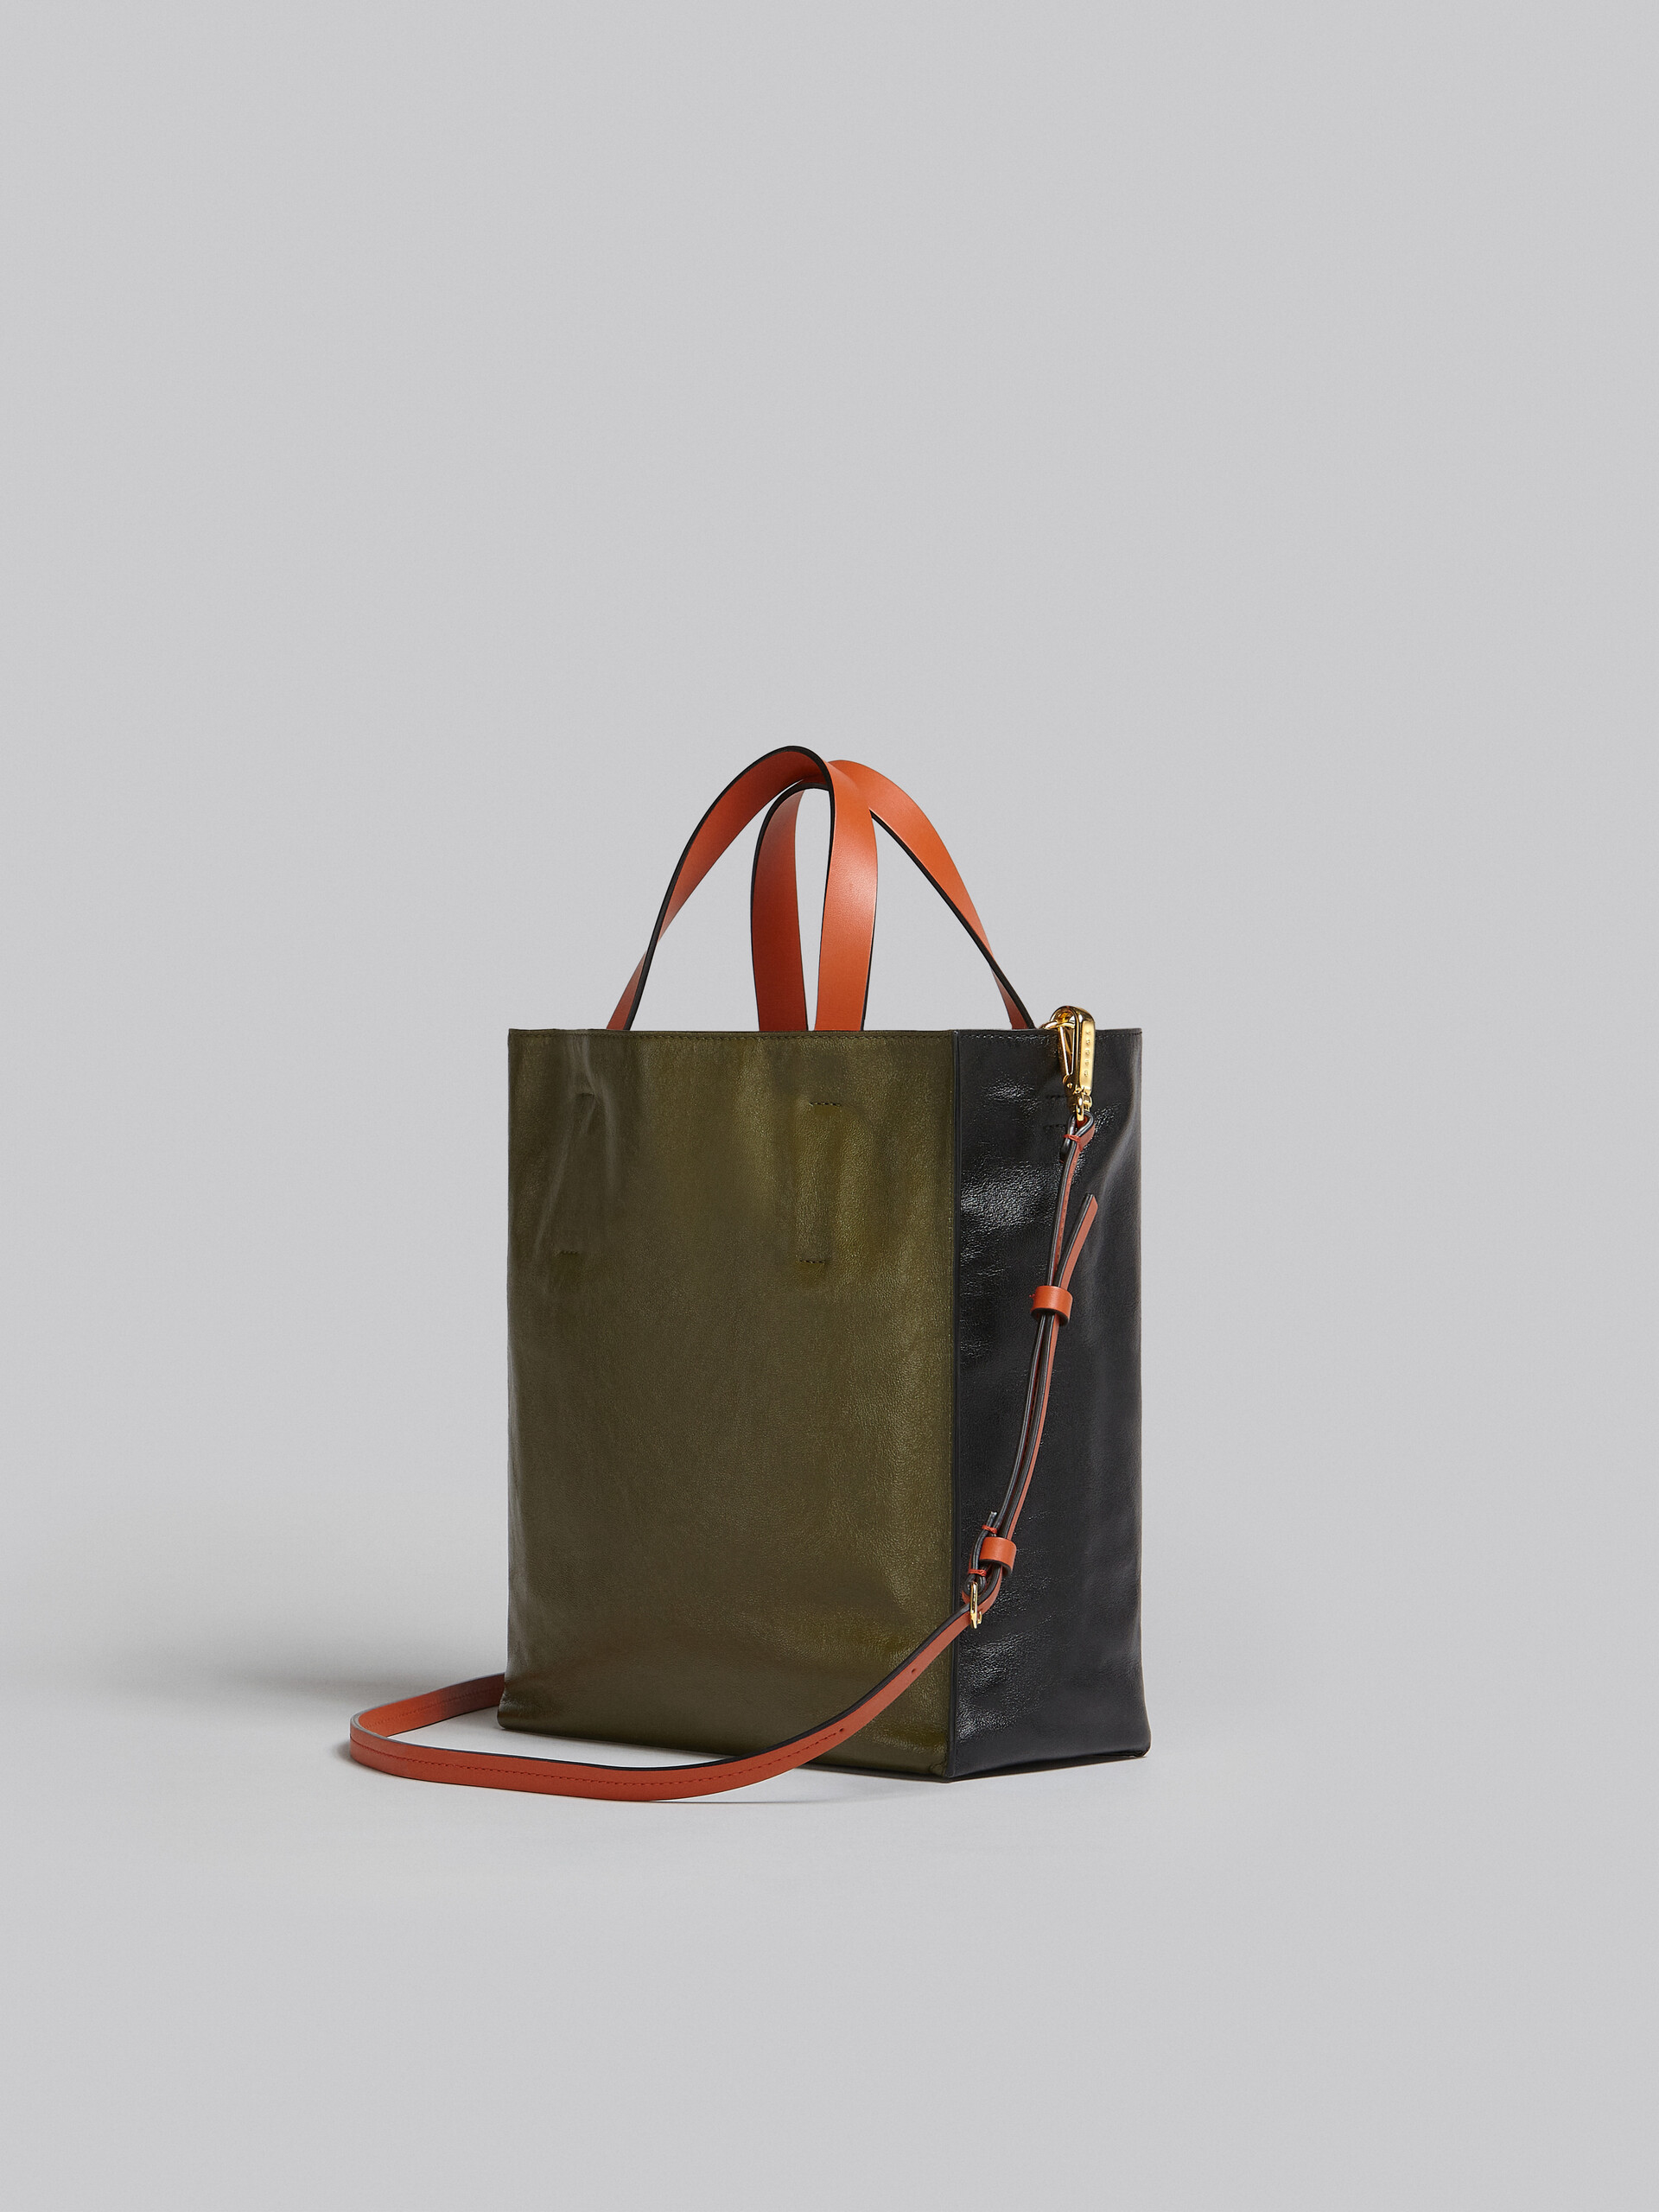 Black green orange tumbled leather MUSEO SOFT bag - Shopping Bags - Image 3